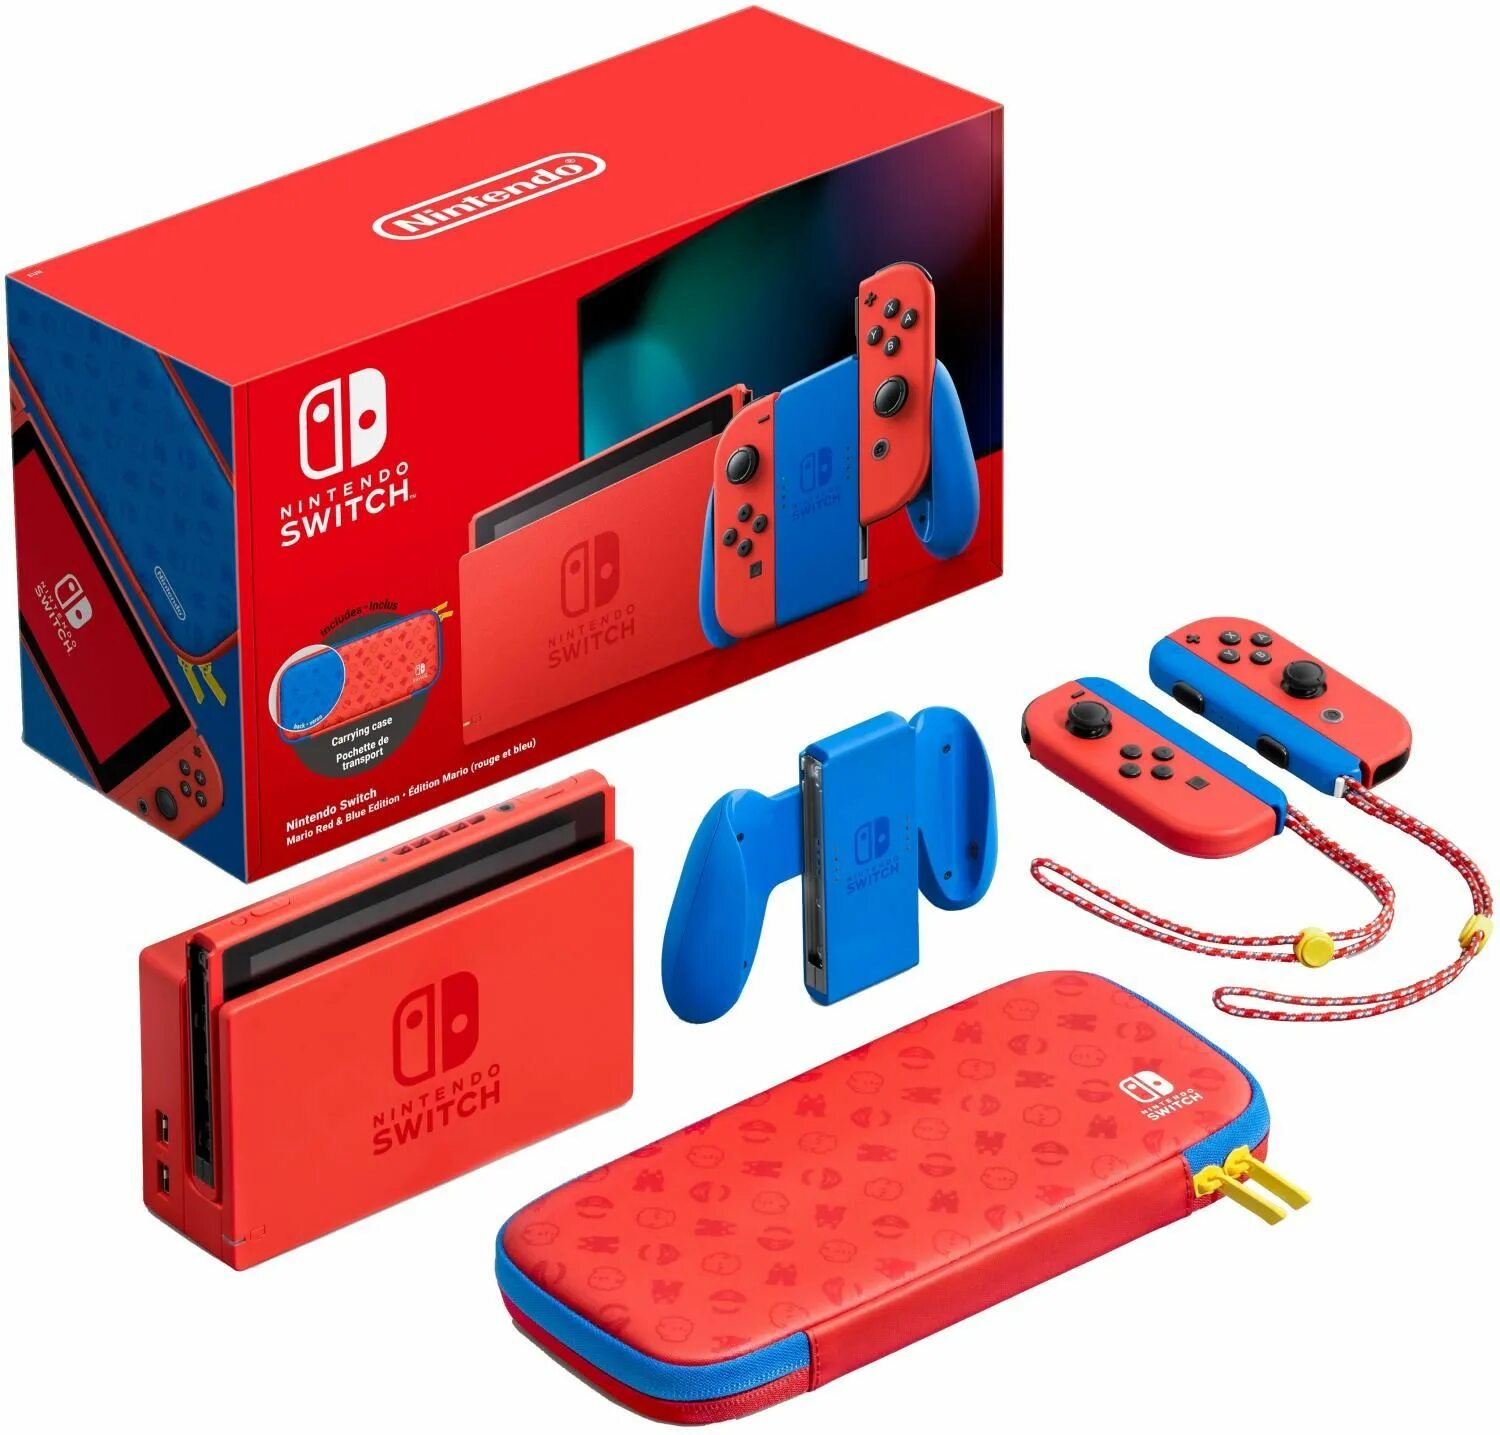 Приставка Нинтендо свитч. Нинтендо свитч Марио. Игровая консоль Nintendo Switch. Nintendo Switch Mario Edition.